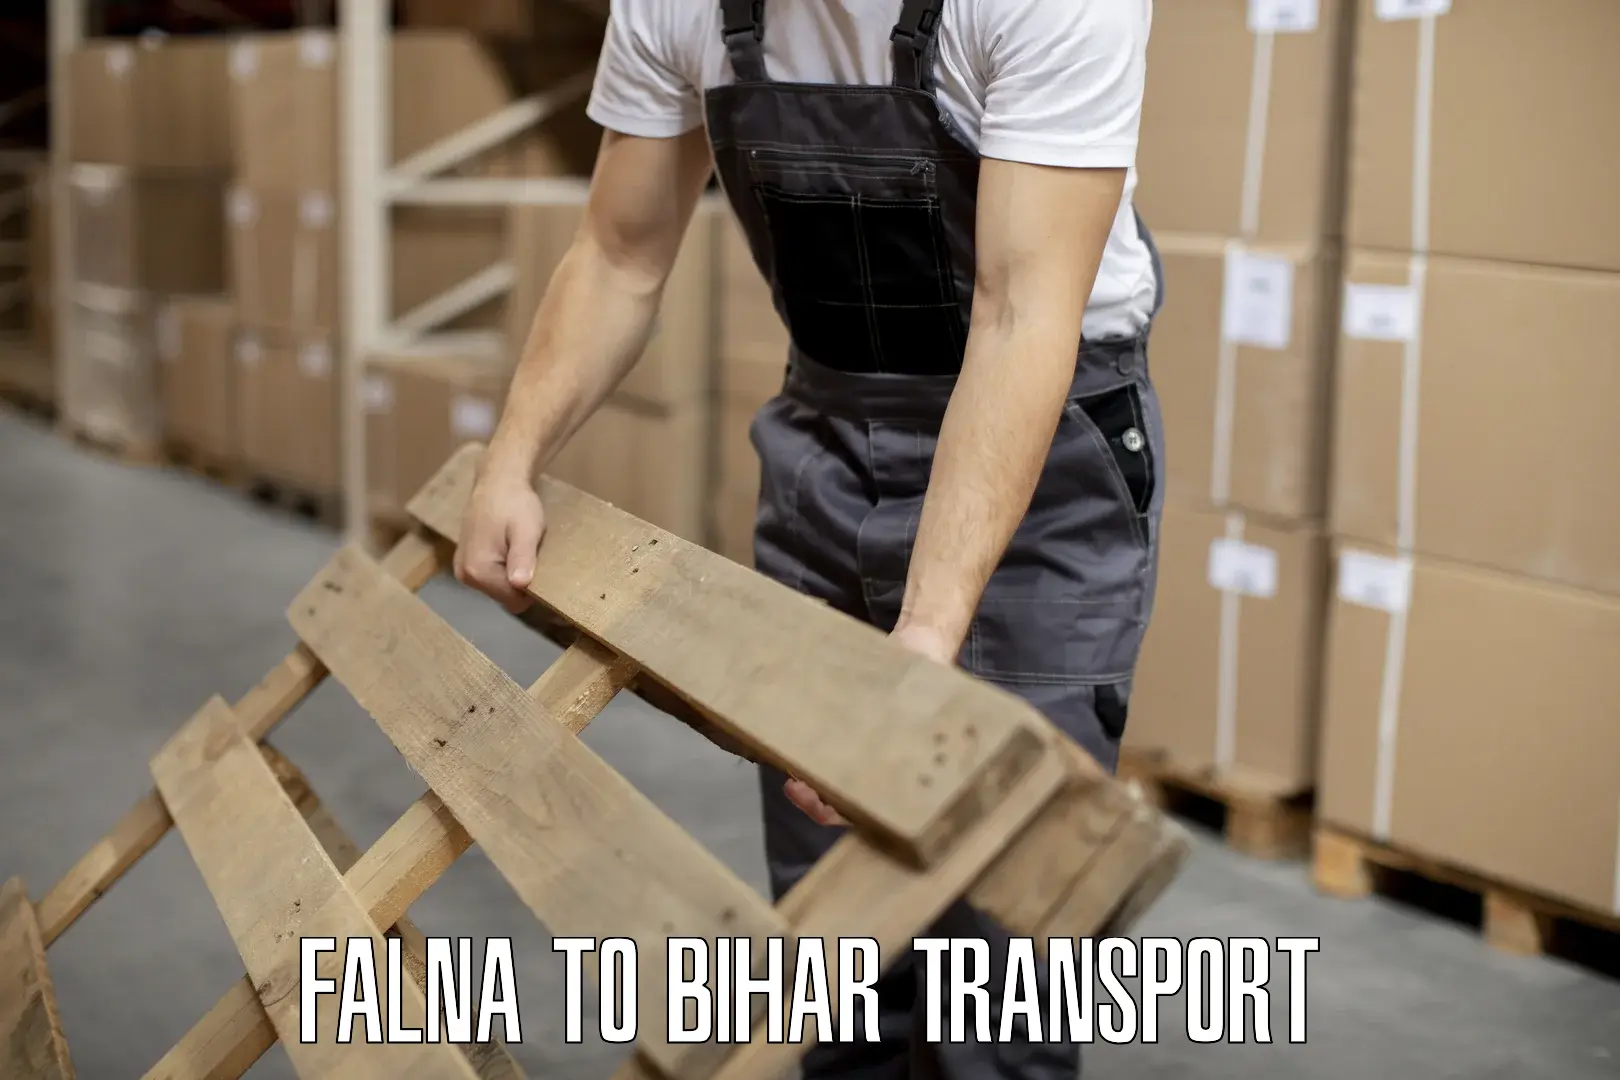 Pick up transport service Falna to Fatwah